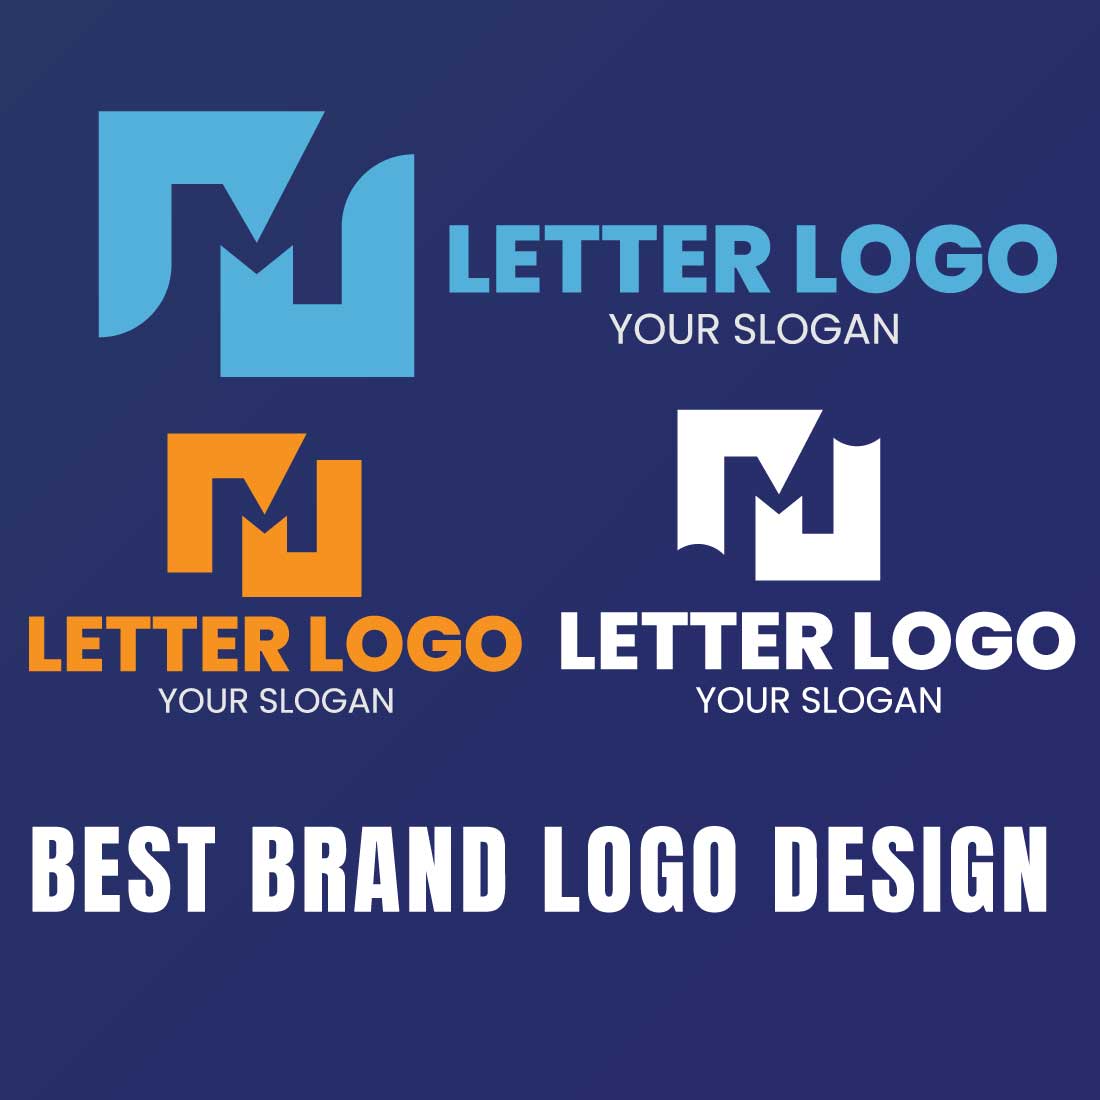 M Letter Logo Brand Logo design preview image.